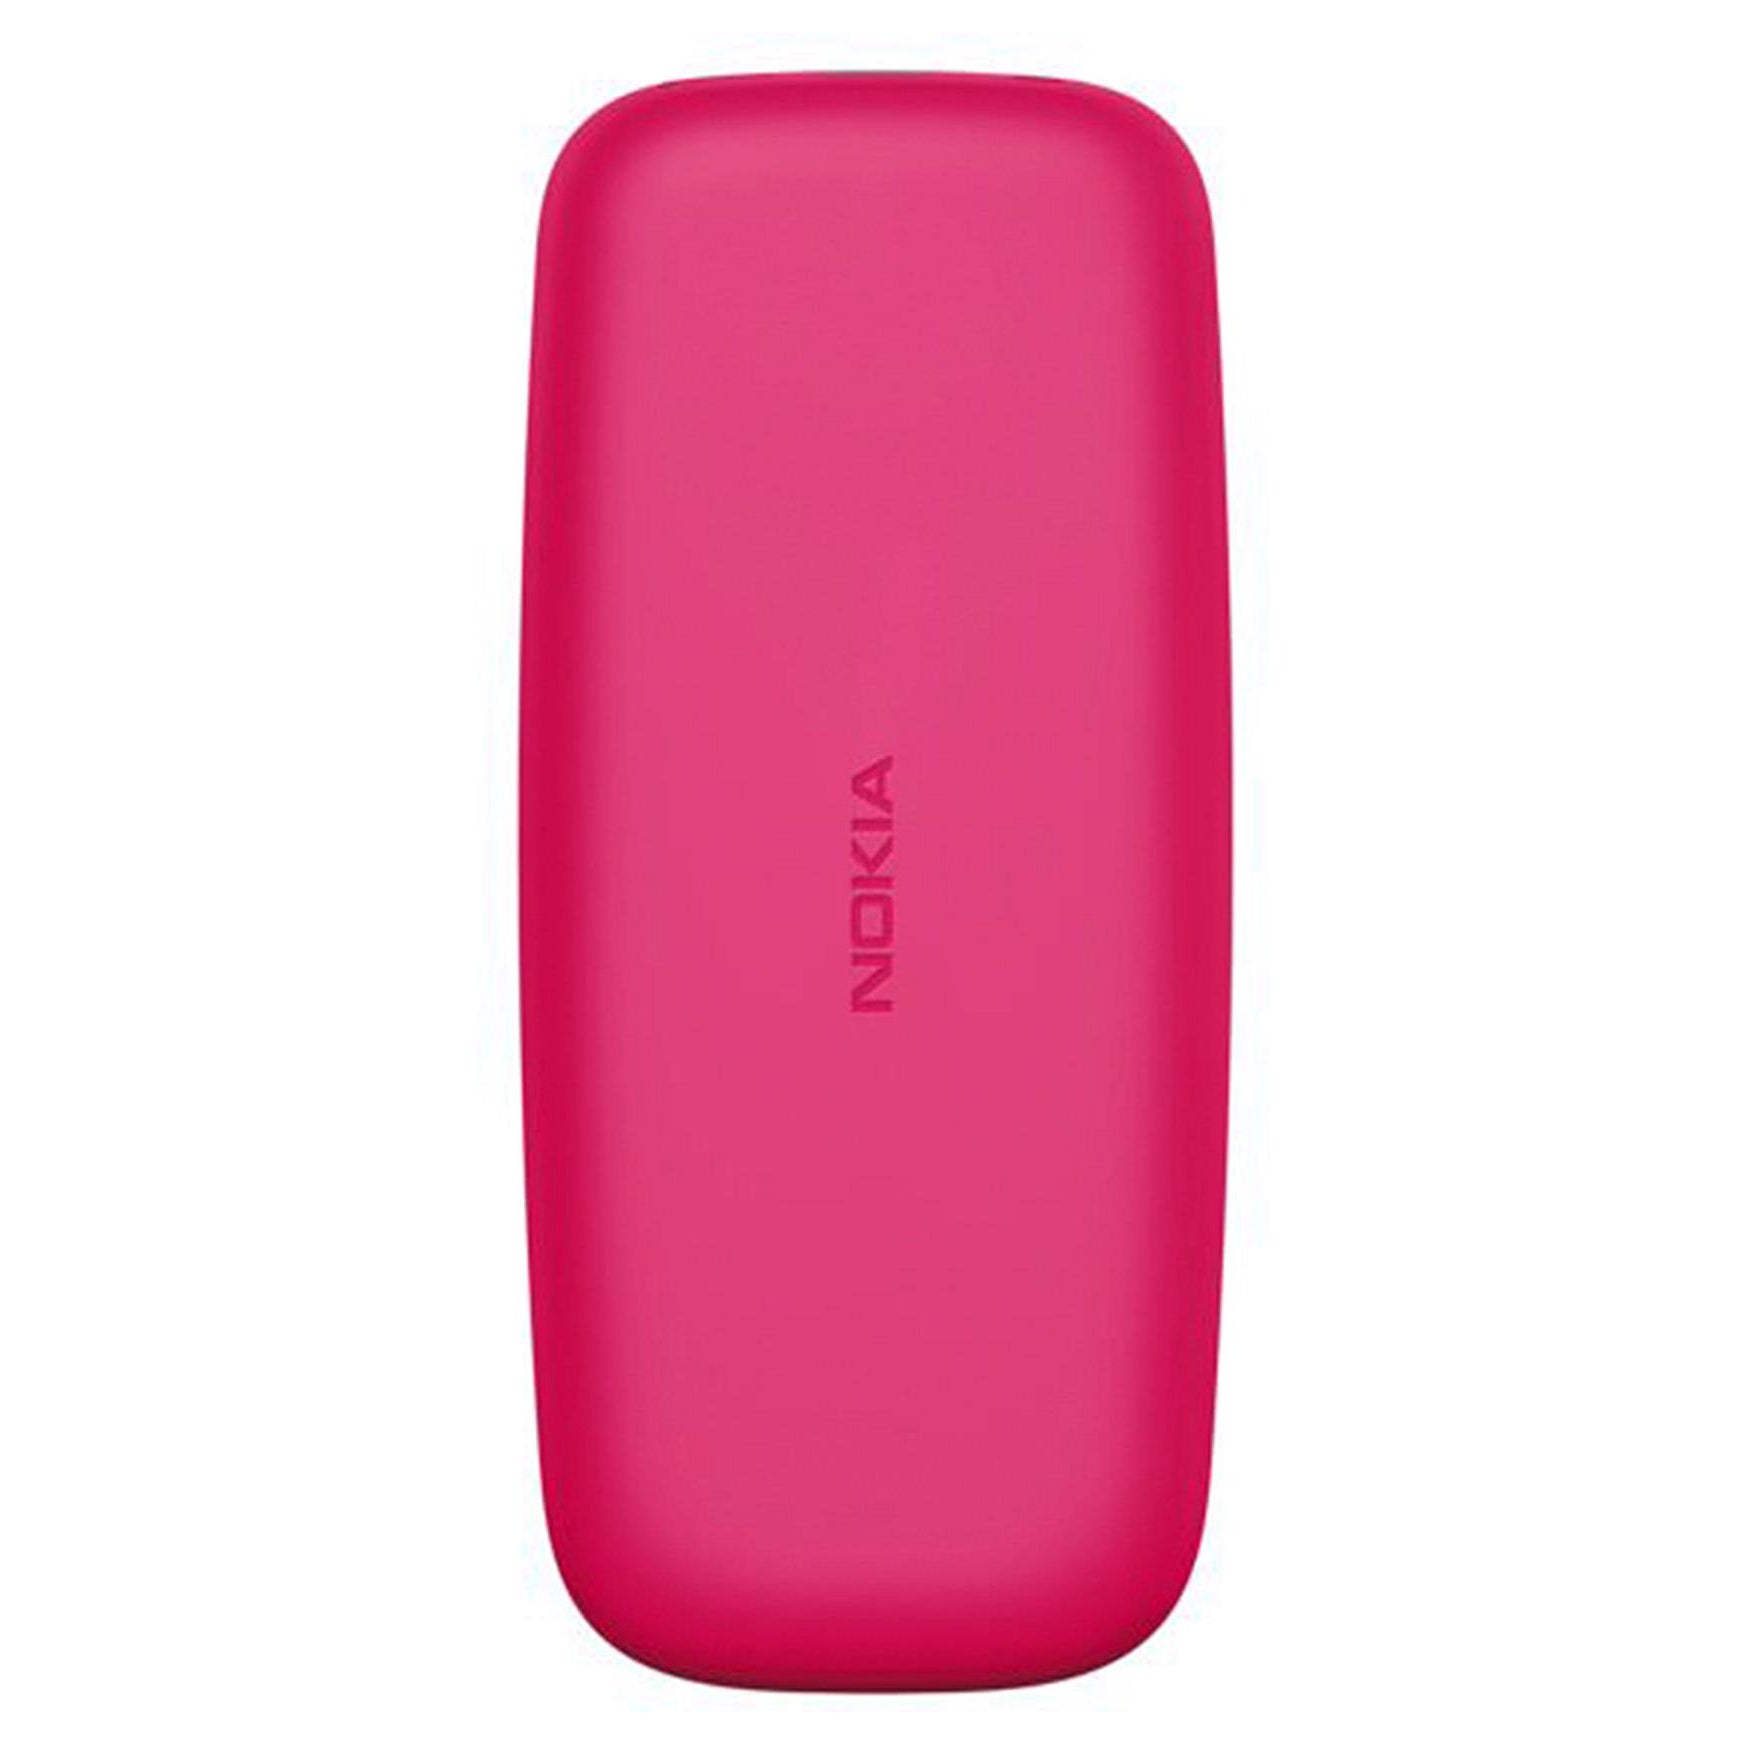 Nokia 105 (4 edition) 1.77 Inch UK SIM Free (Single SIM) - Pink - Refurbished Good